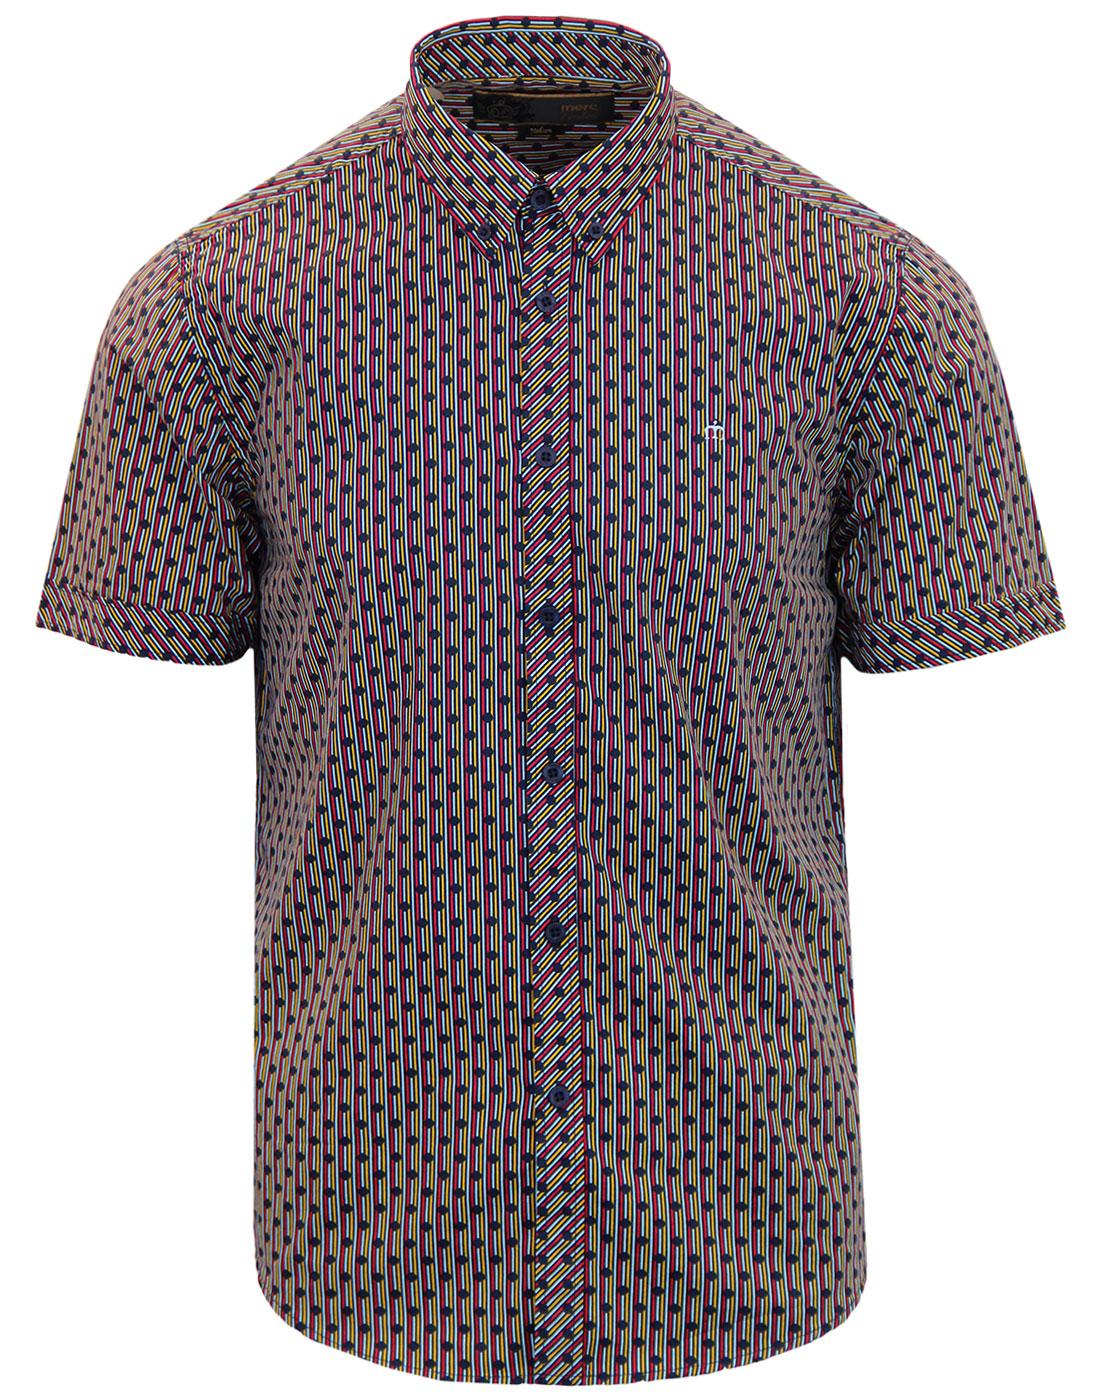 Barrack MERC 1960s Mod Polka Dot Stripe Shirt NAVY